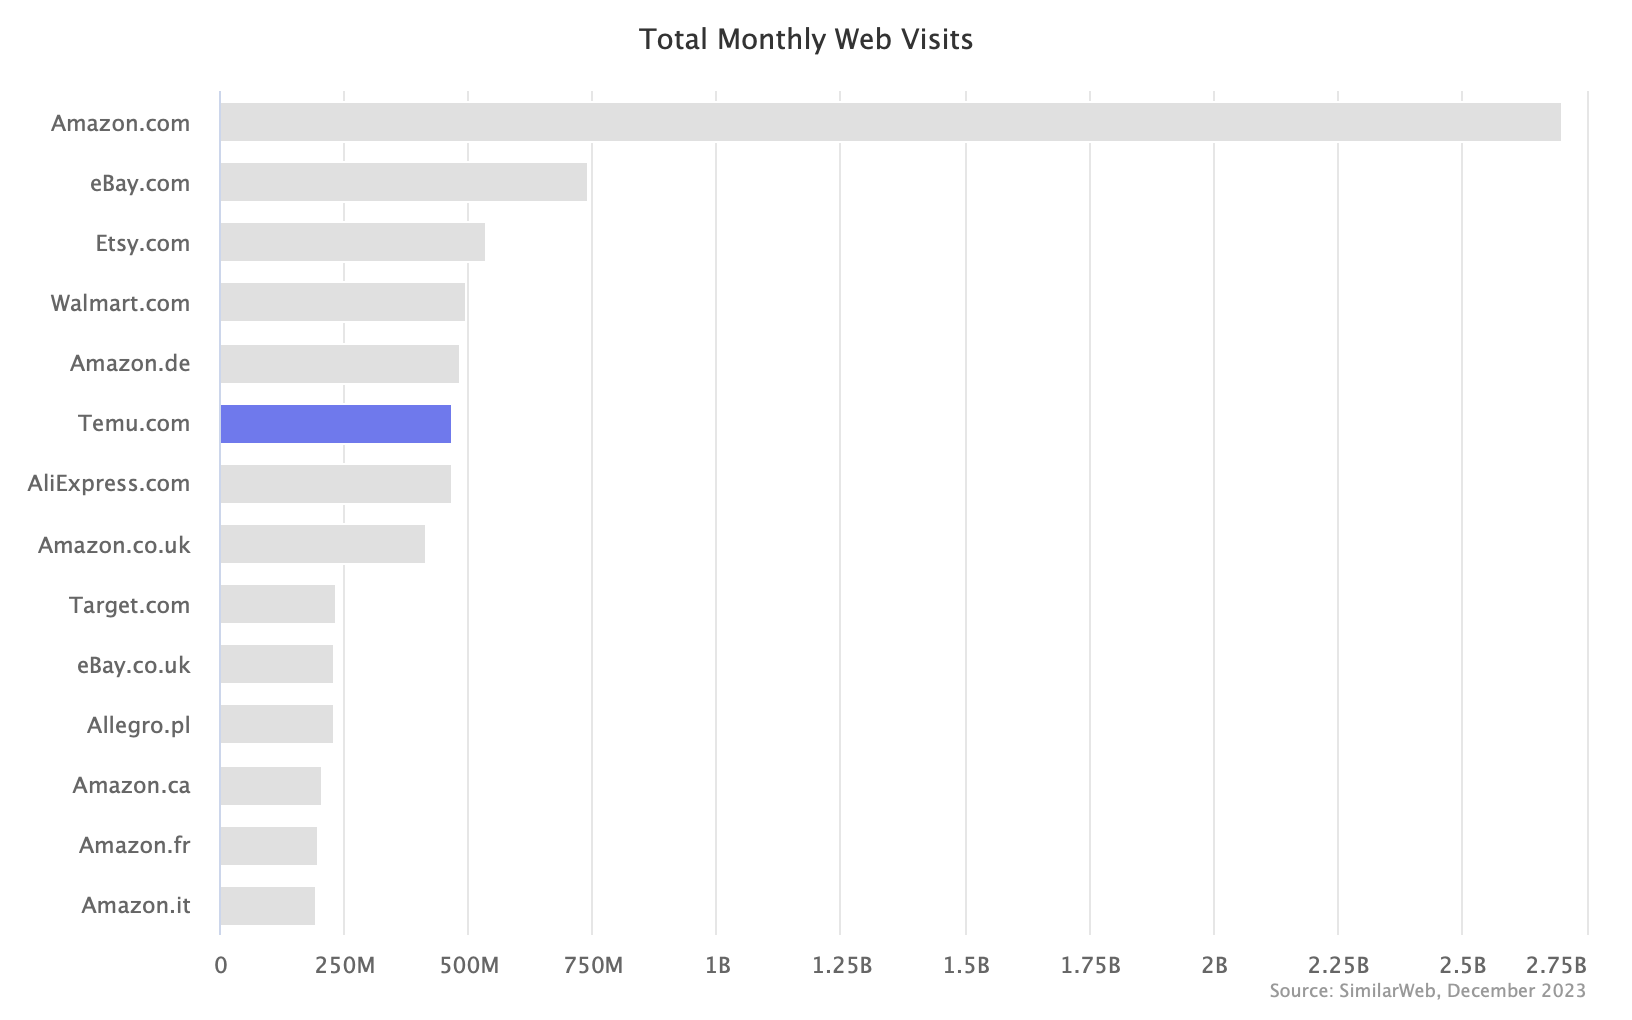 Total Monthly Web Visits, December 2023